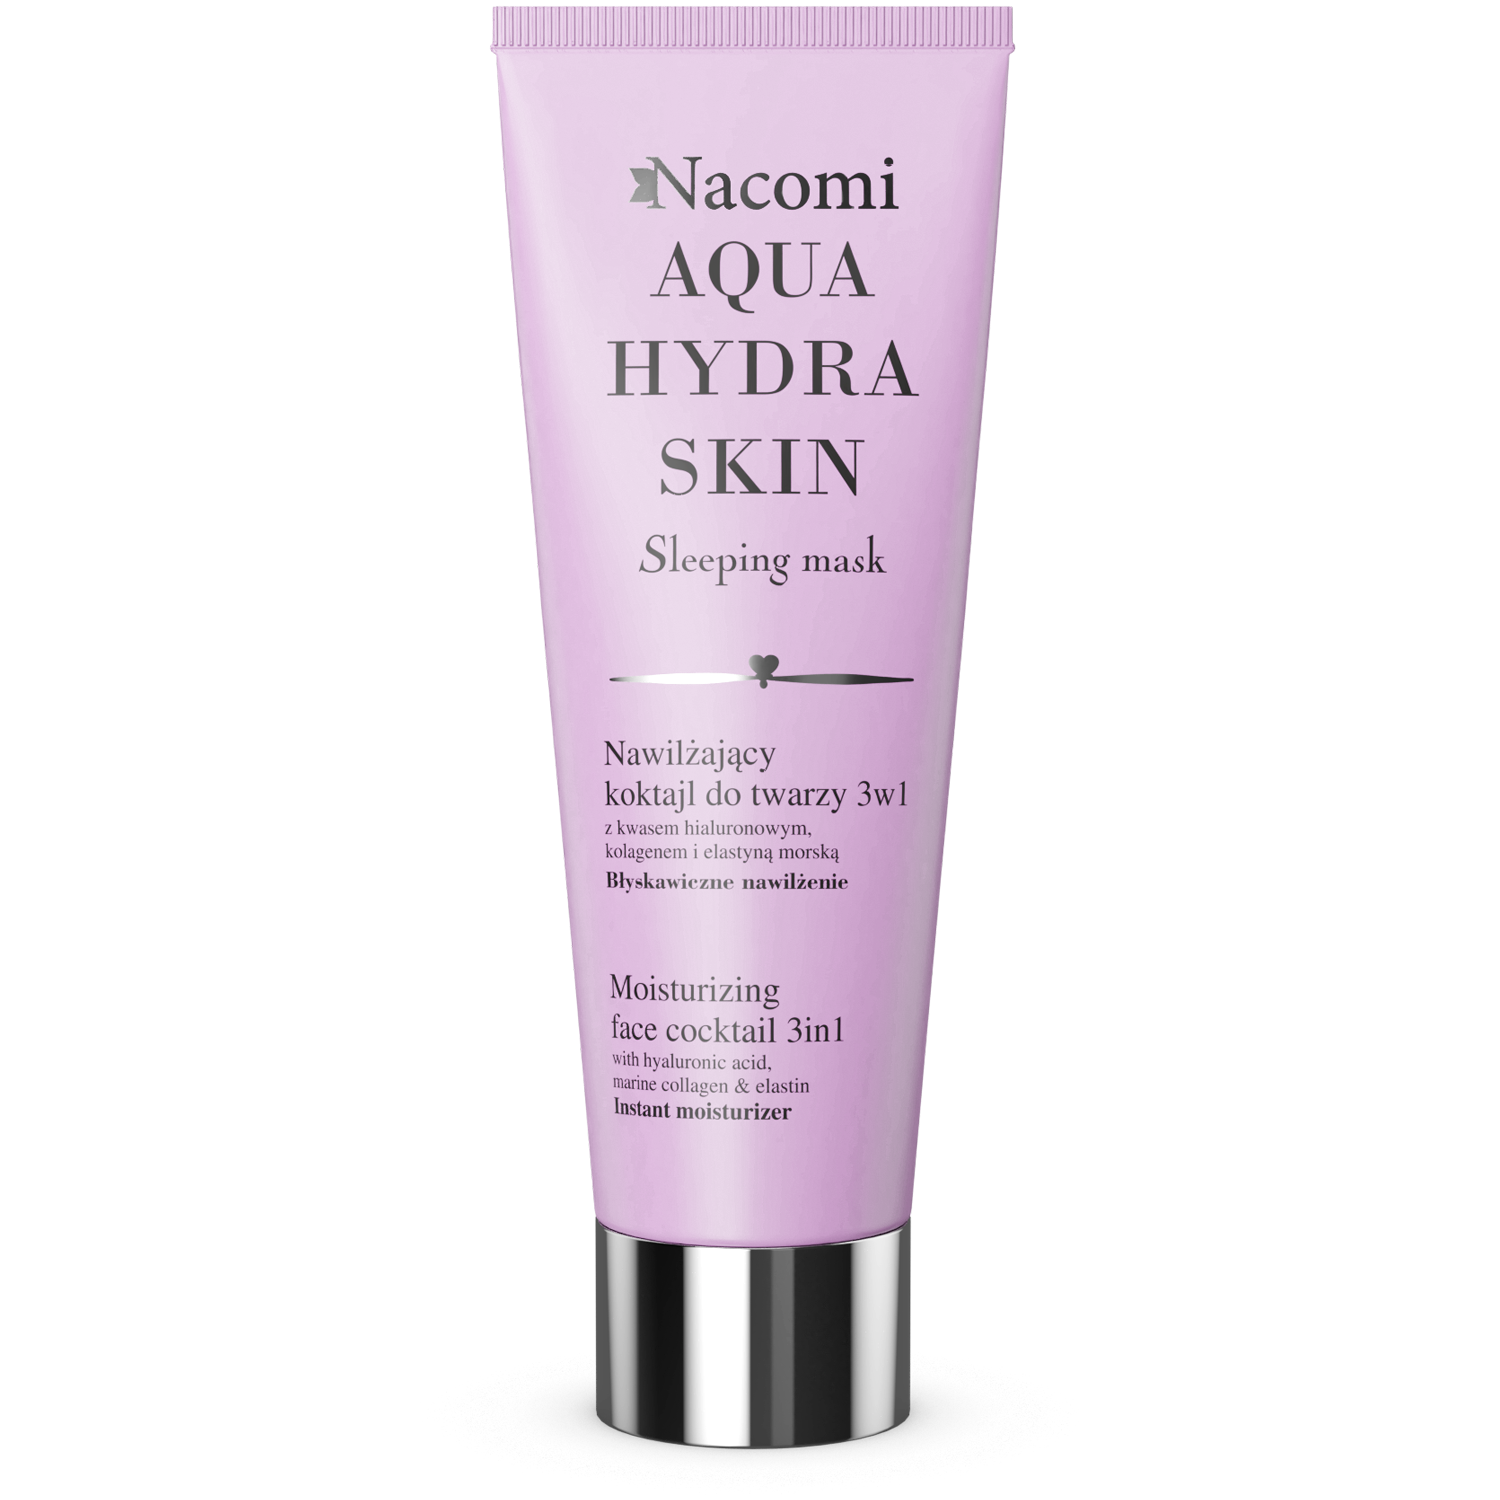 Nacomi Aqua Hydra Skin